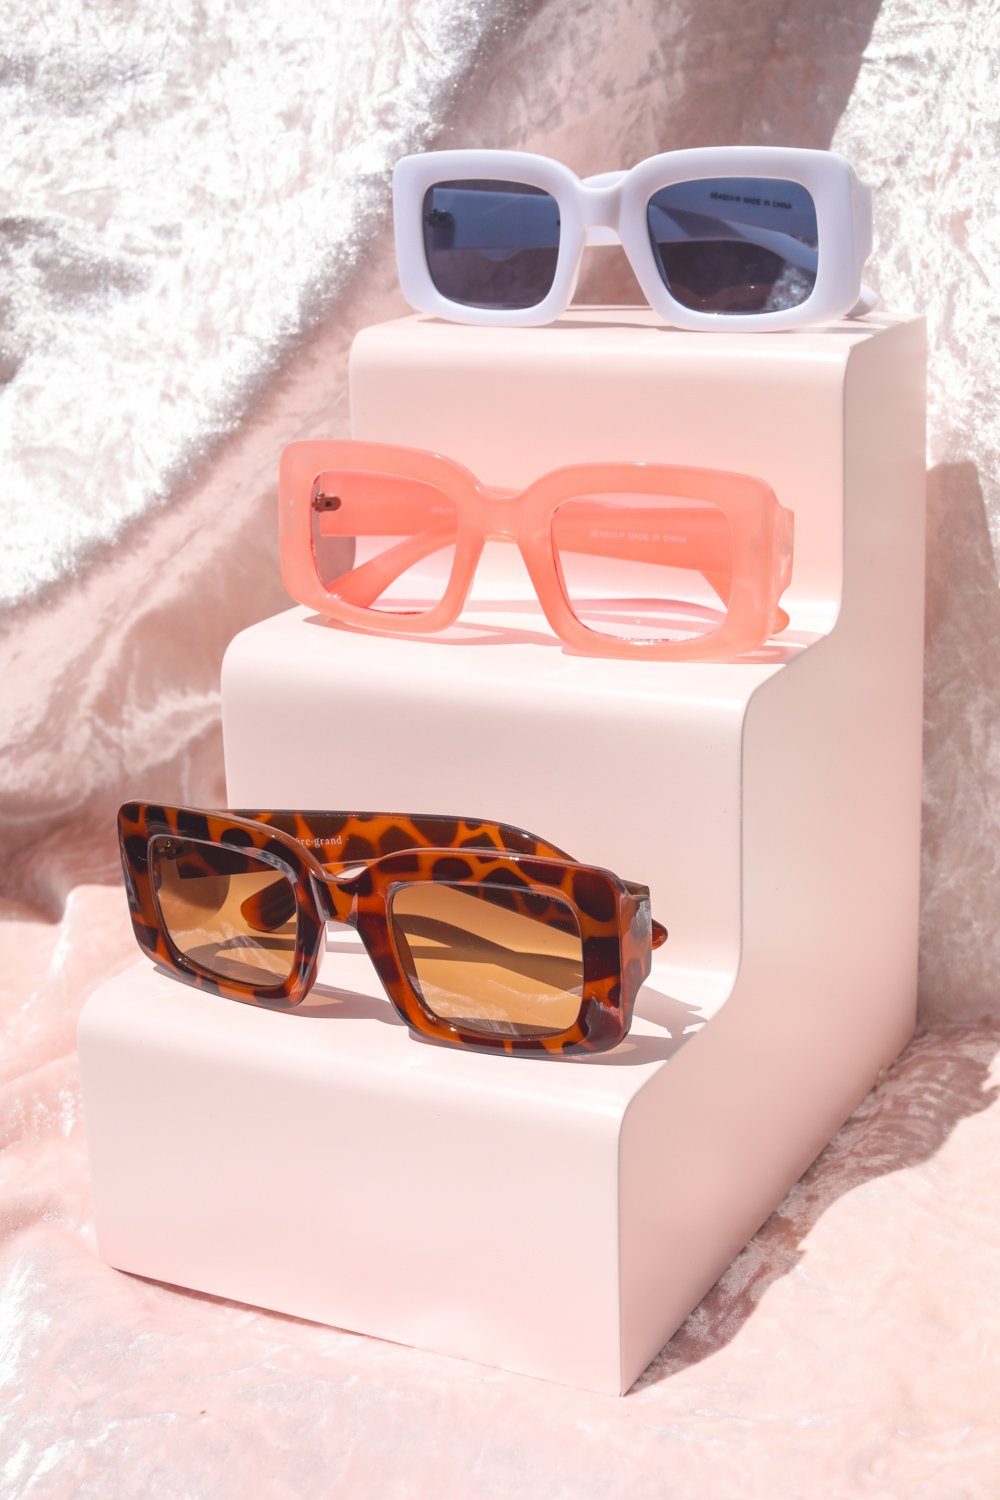 The Square Chunky Sunglasses